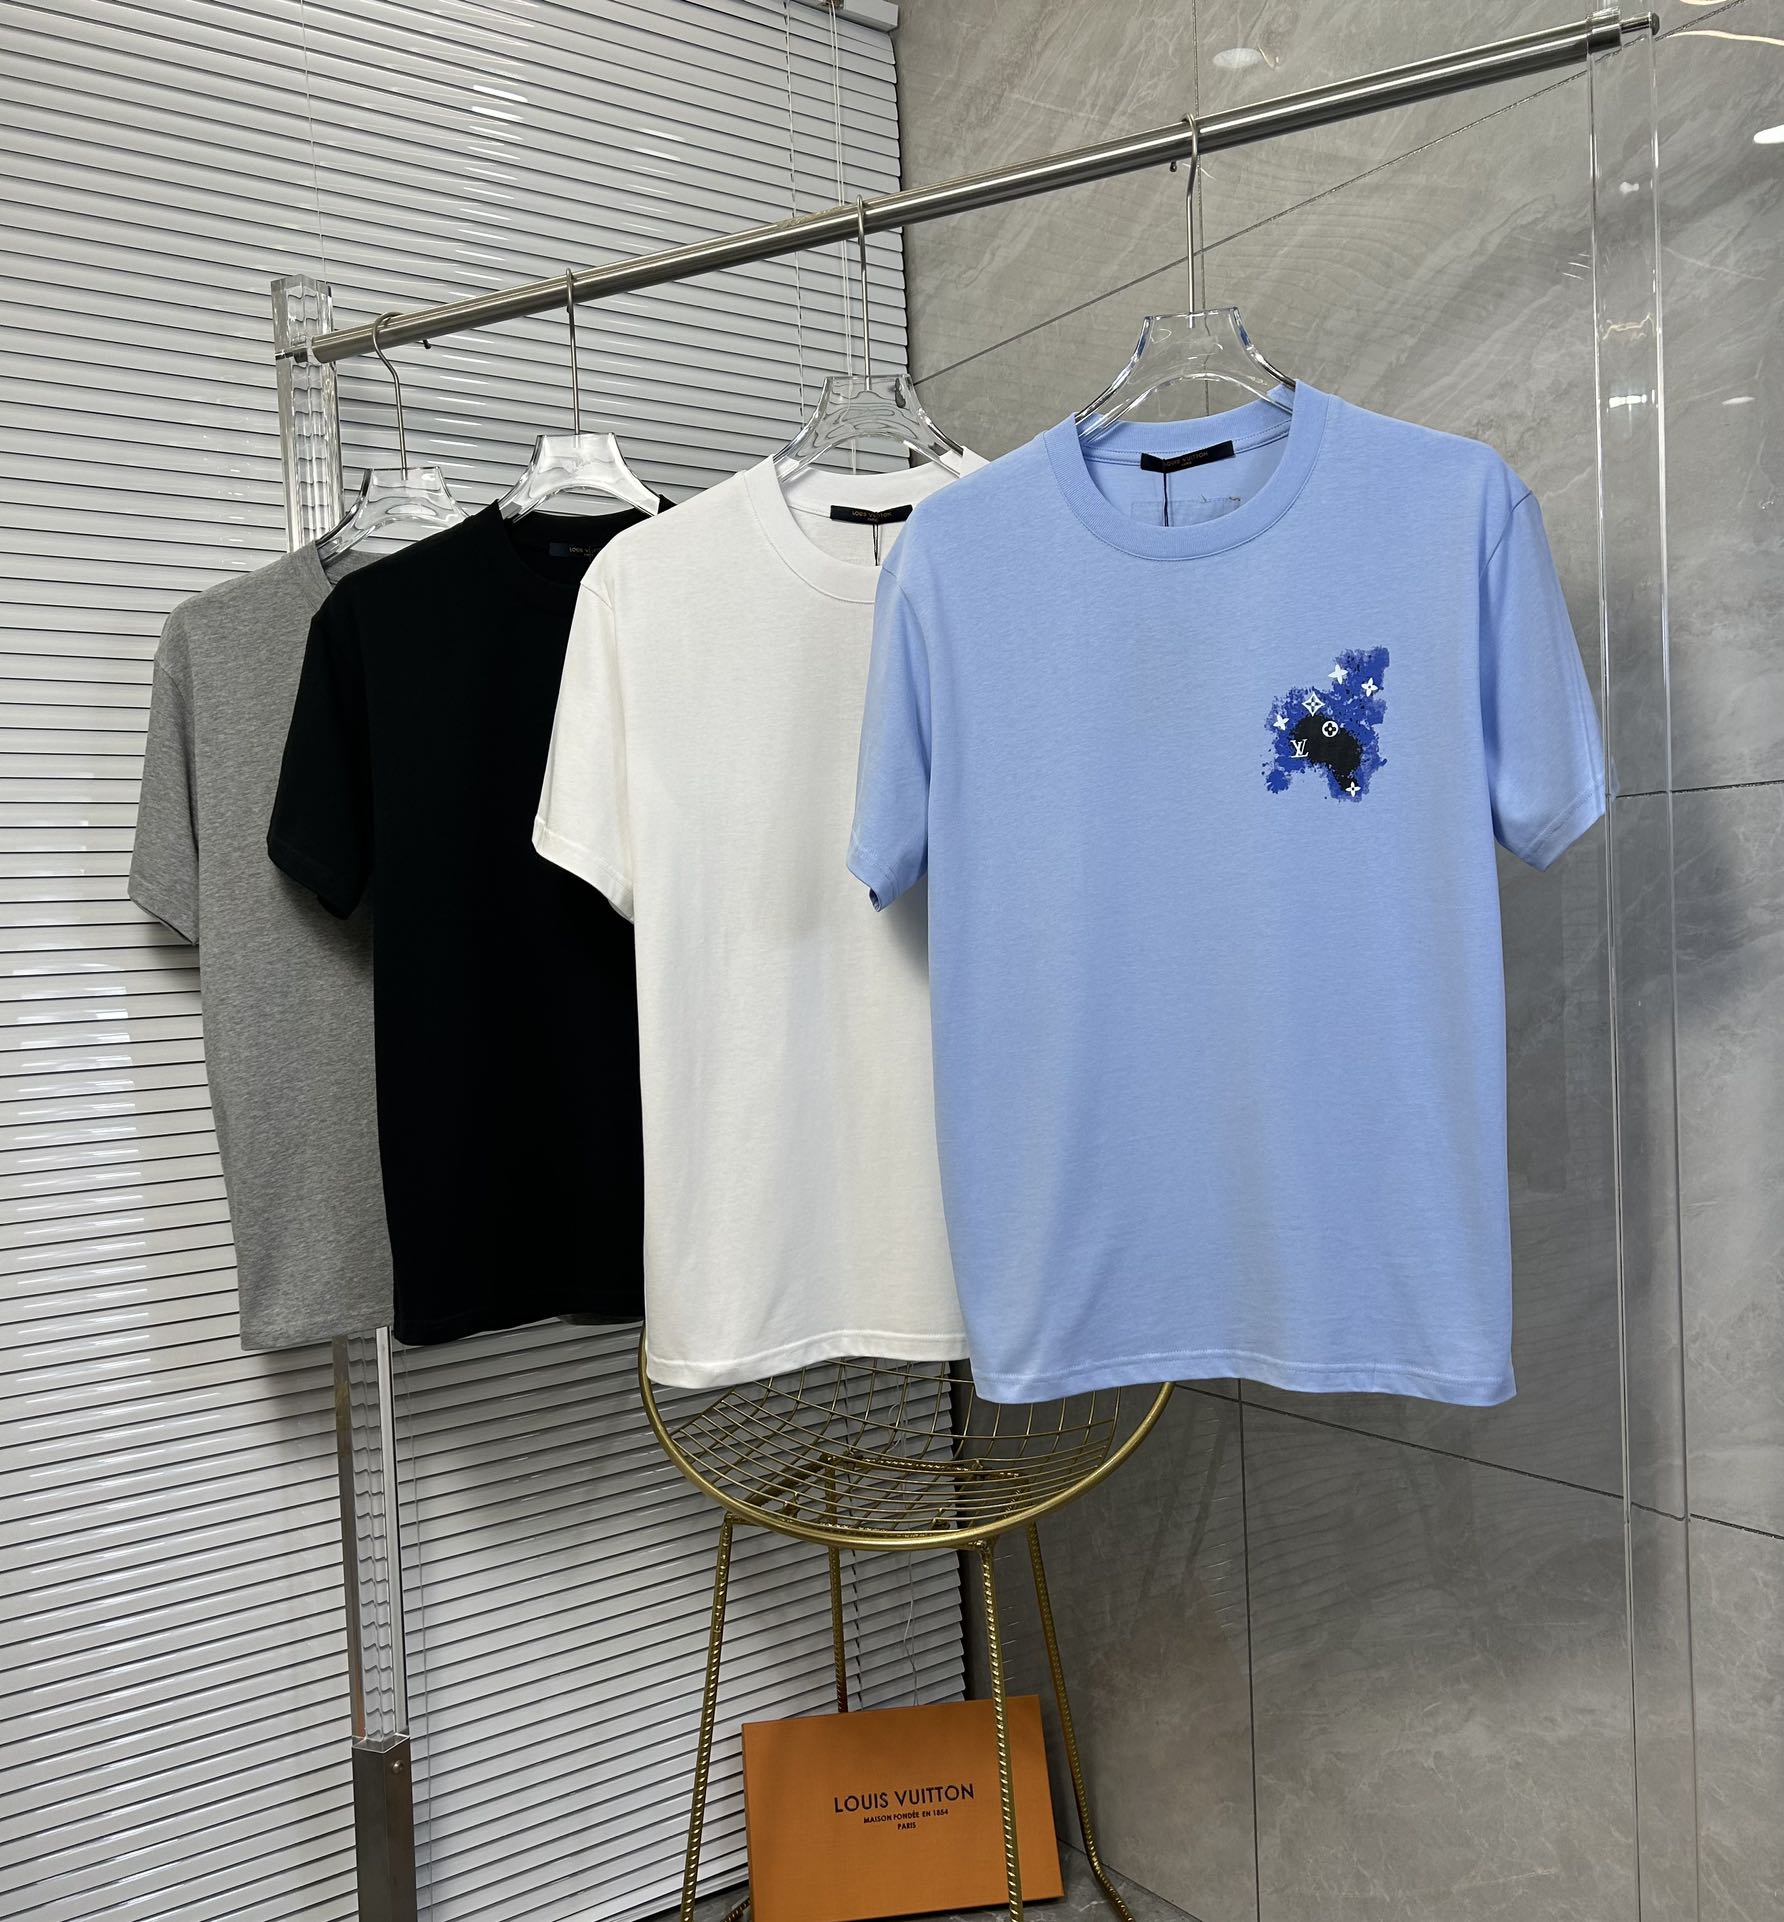 Louis Vuitton Cheap
 Clothing T-Shirt Black Blue Grey Light White Printing Unisex Spring/Summer Collection Fashion Short Sleeve